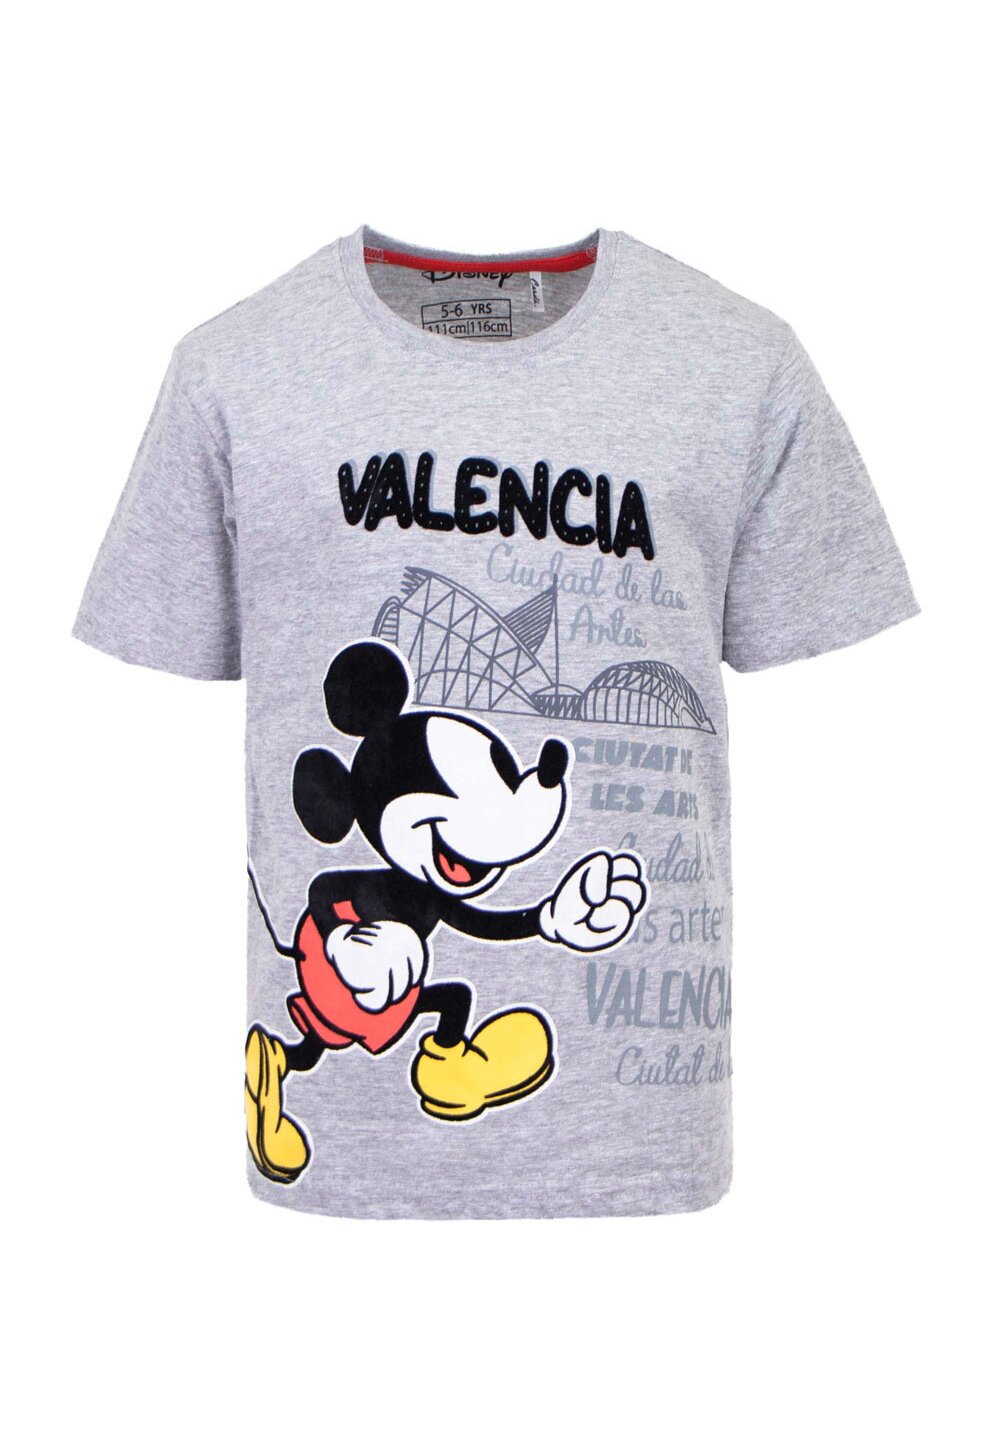 Tricou gri, Valencia, Mickey Mouse DISNEY